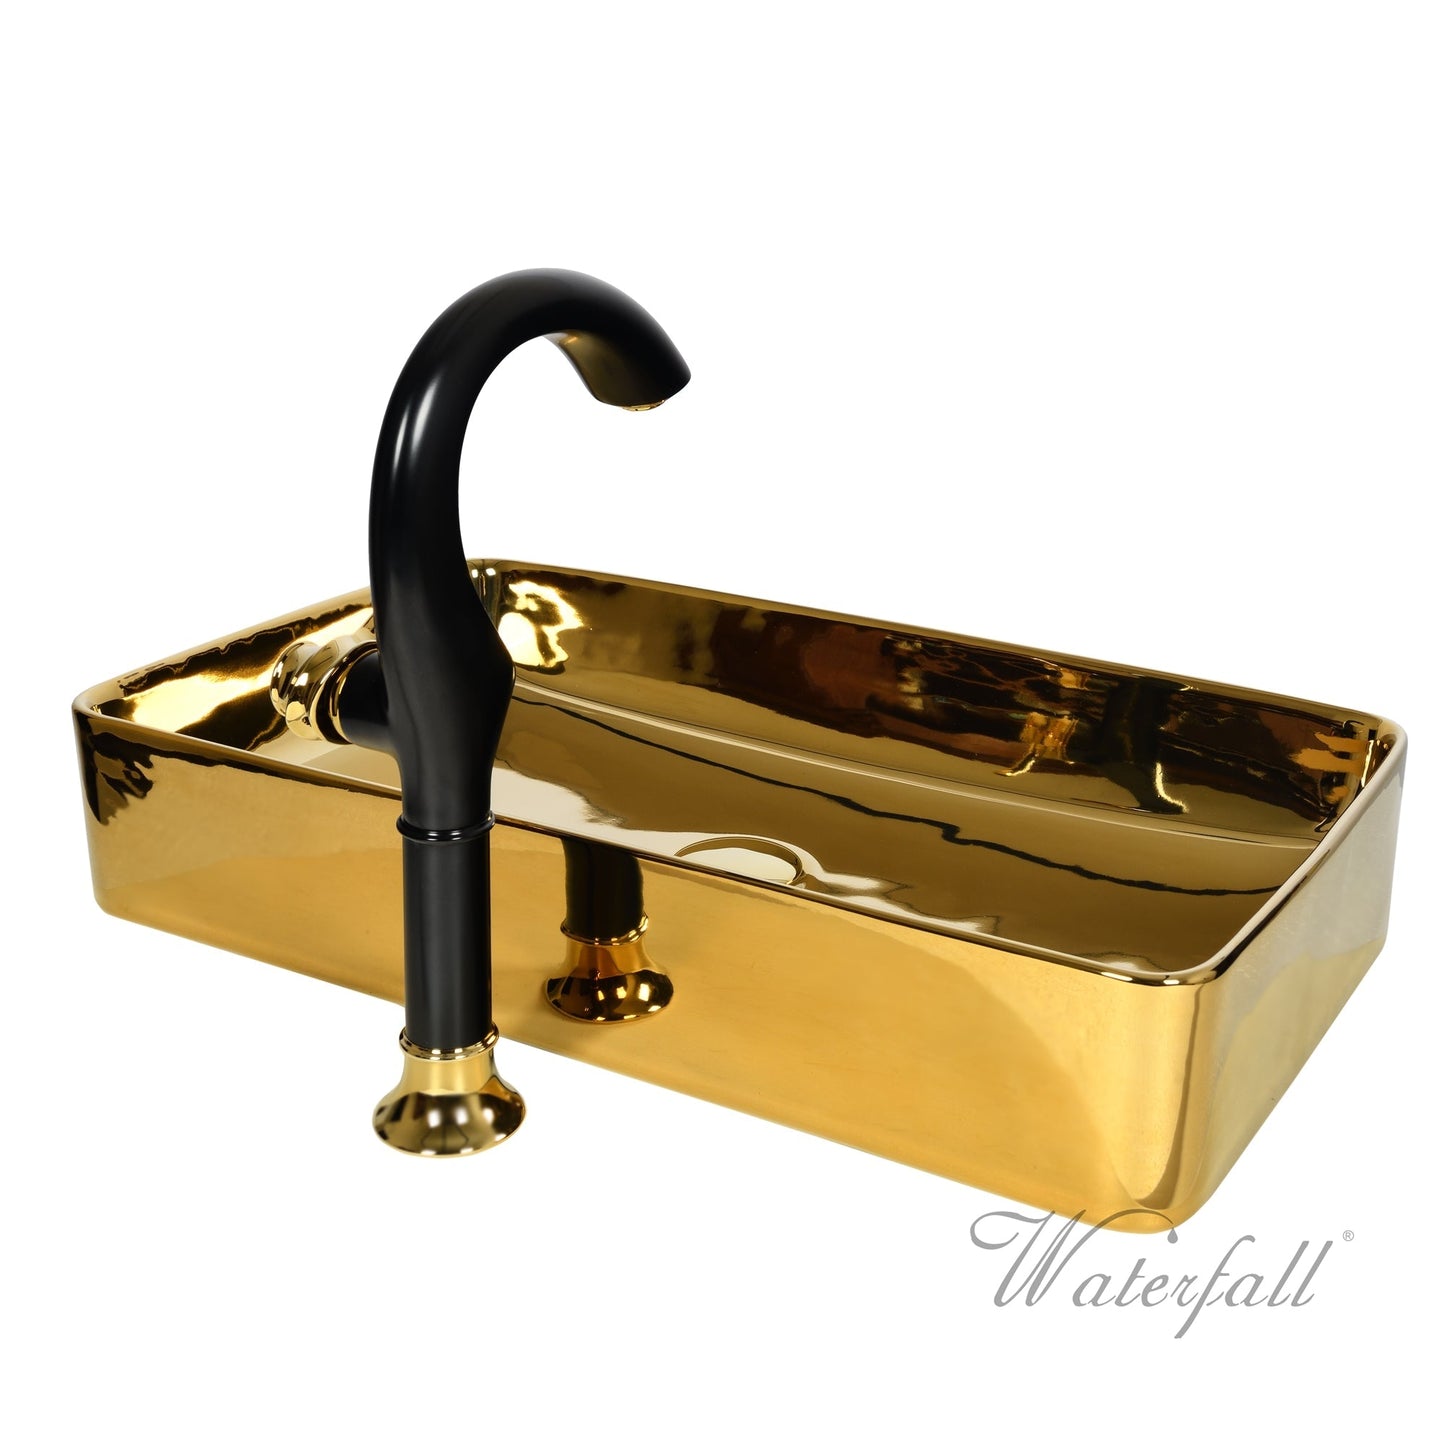 Luxury Gold Ceramic Sink and Single Handle Cairo Faucet Combo - |VESIMI Design| Luxury Bathrooms & Deco